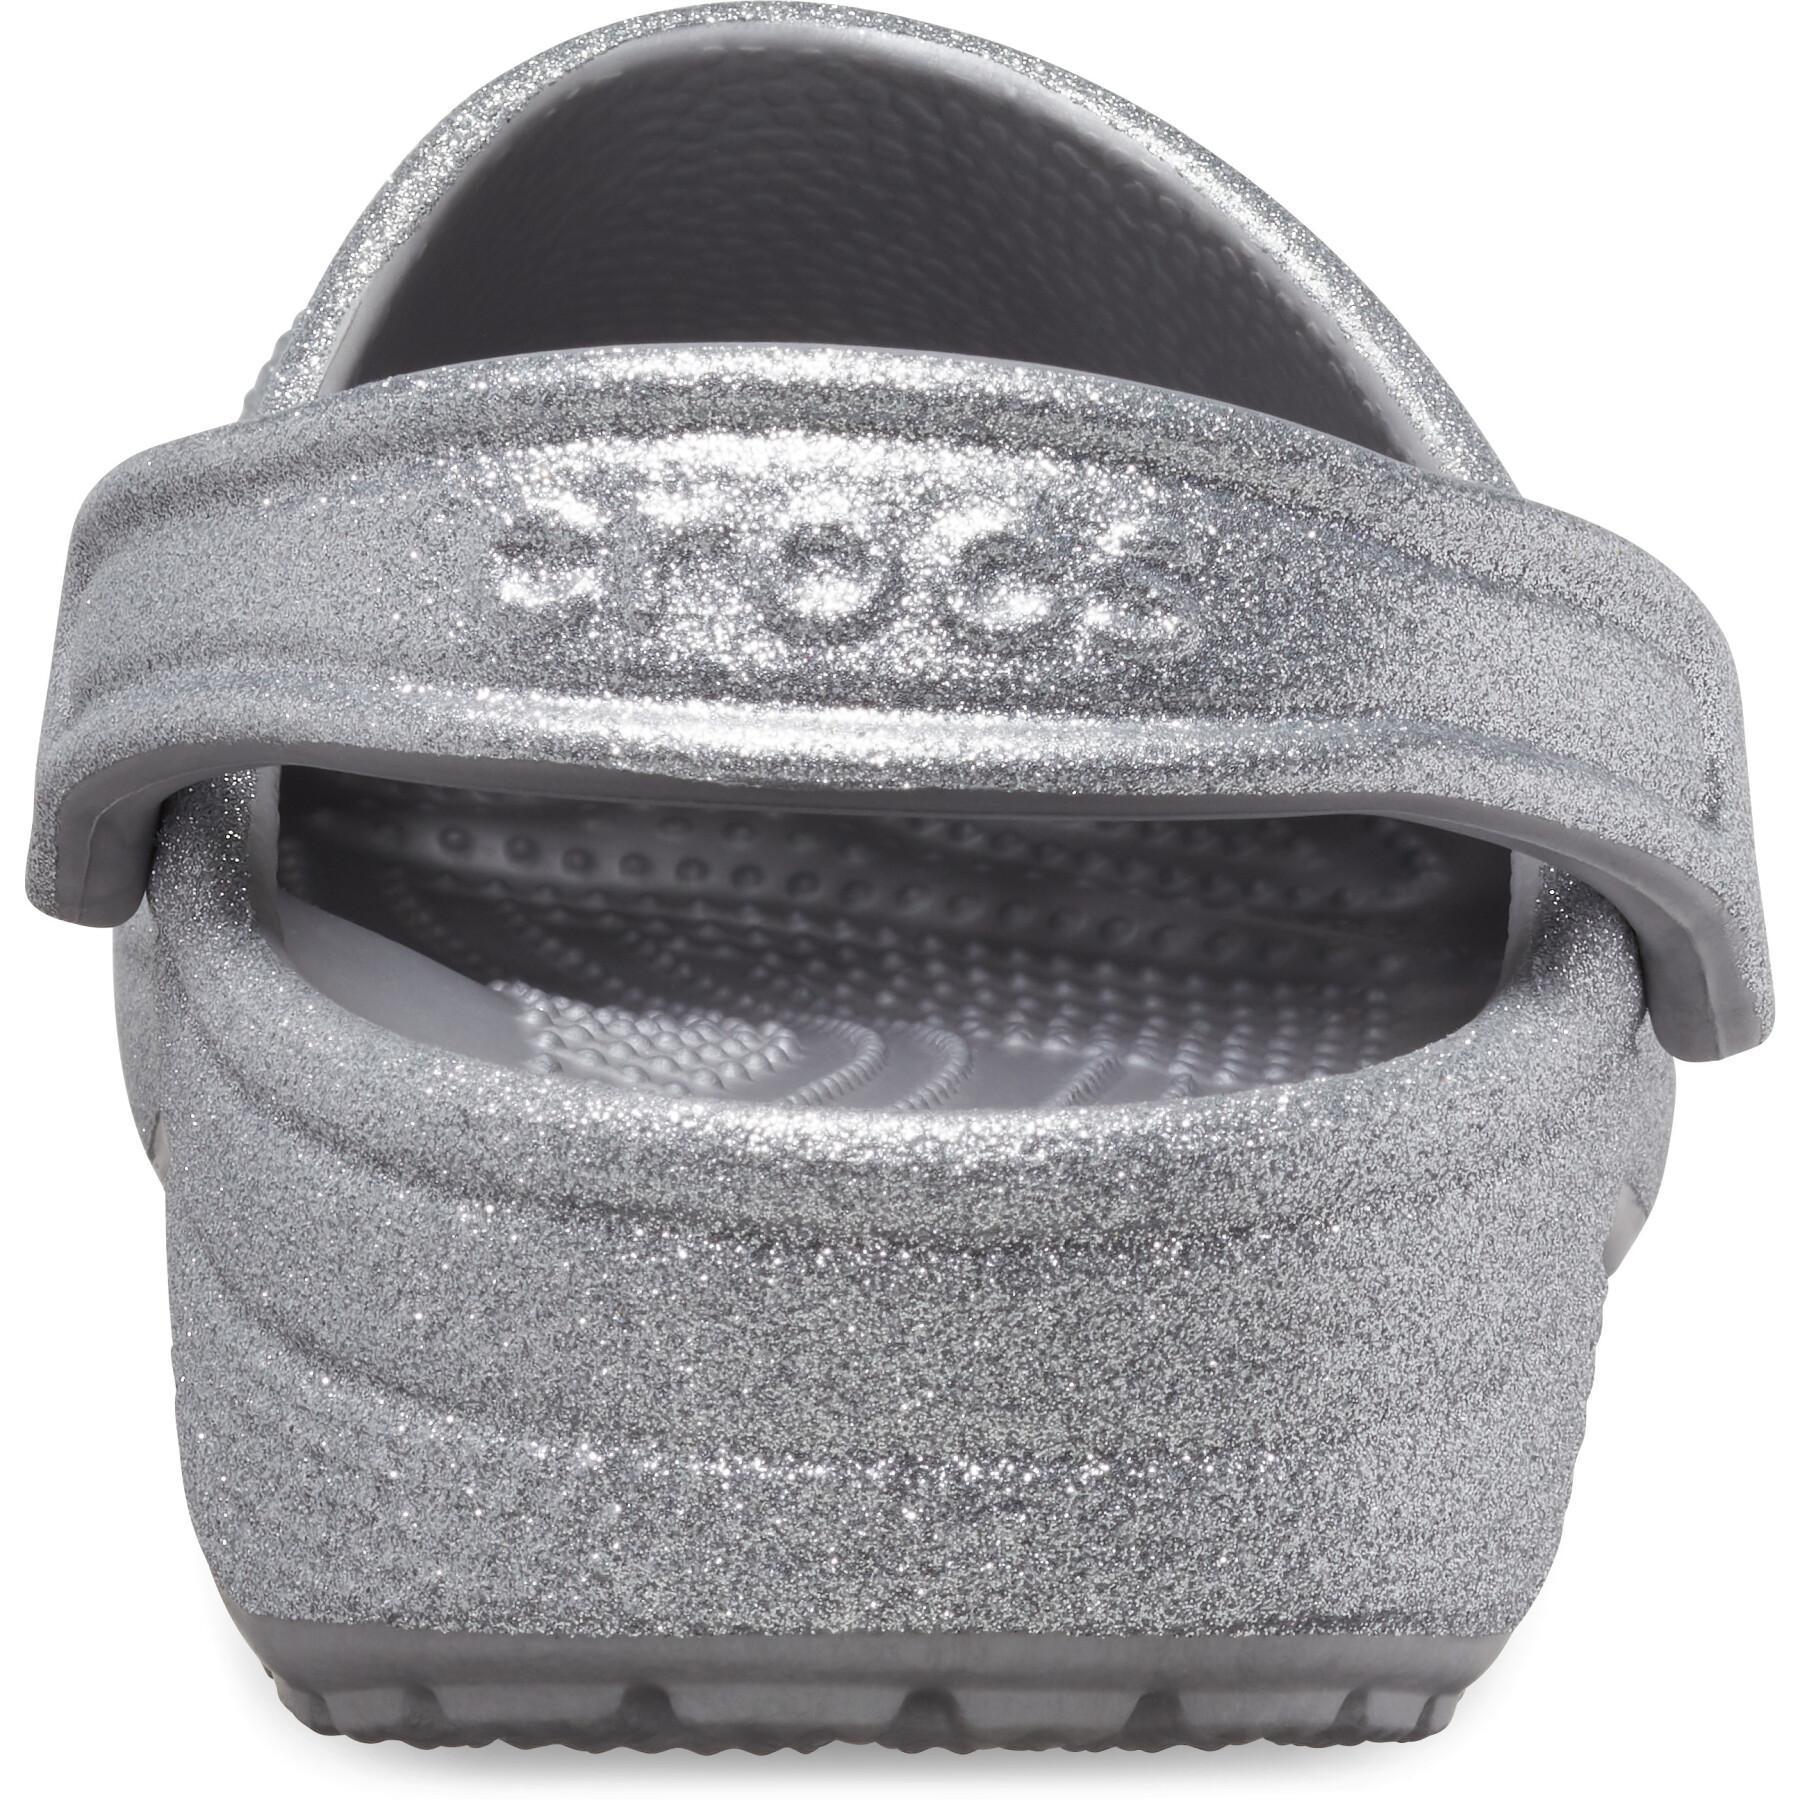 Crocs classic glitter clog